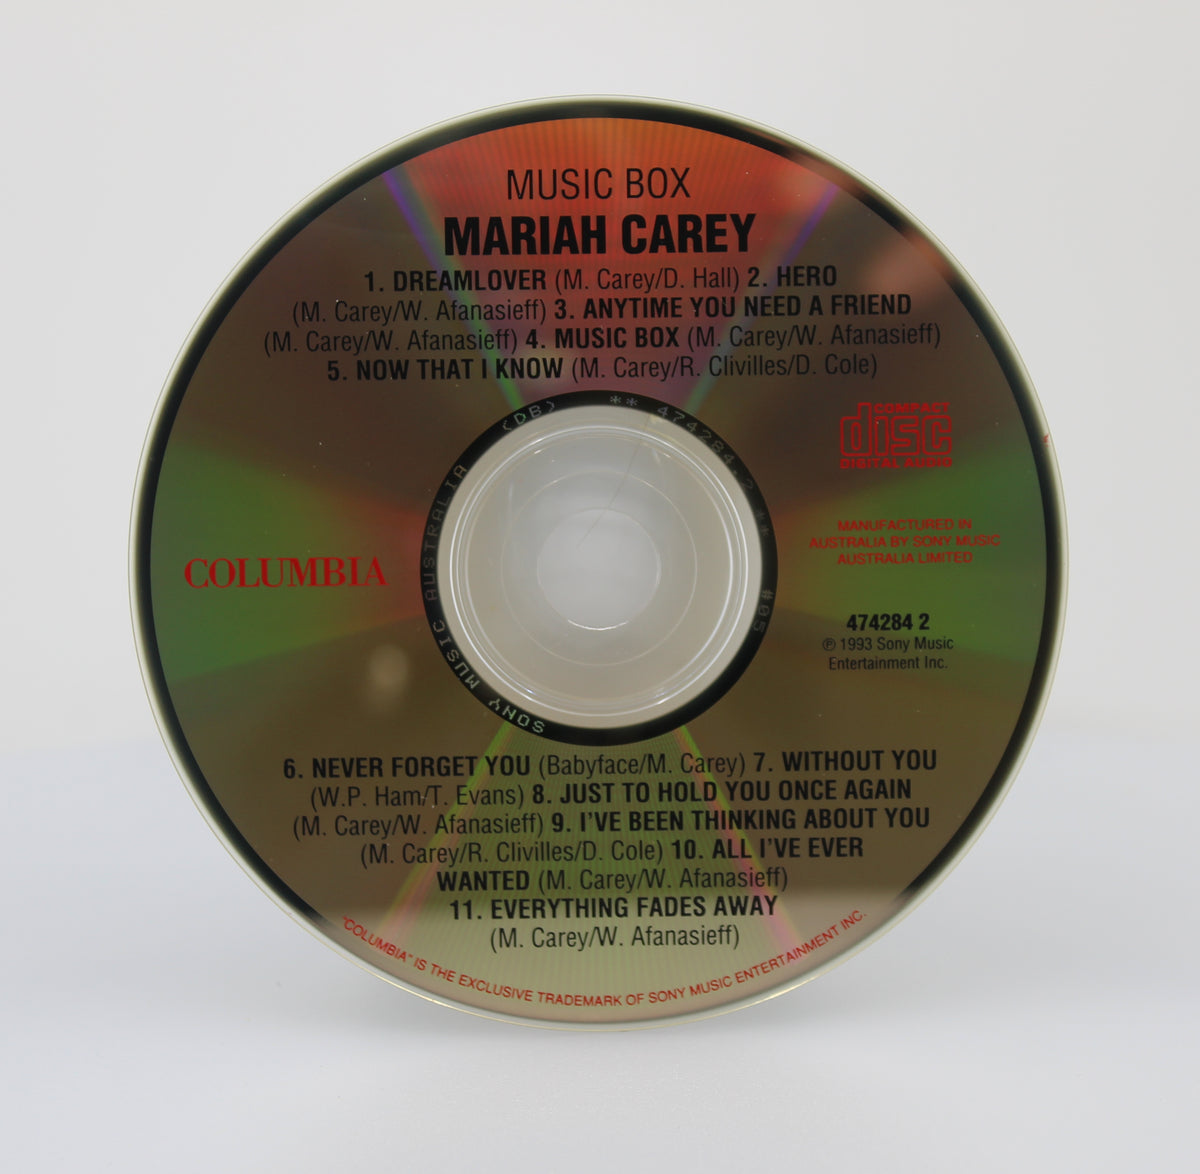 Mariah Carey - Music Box, CD Album, Limited Edition Gold, Australia 1994